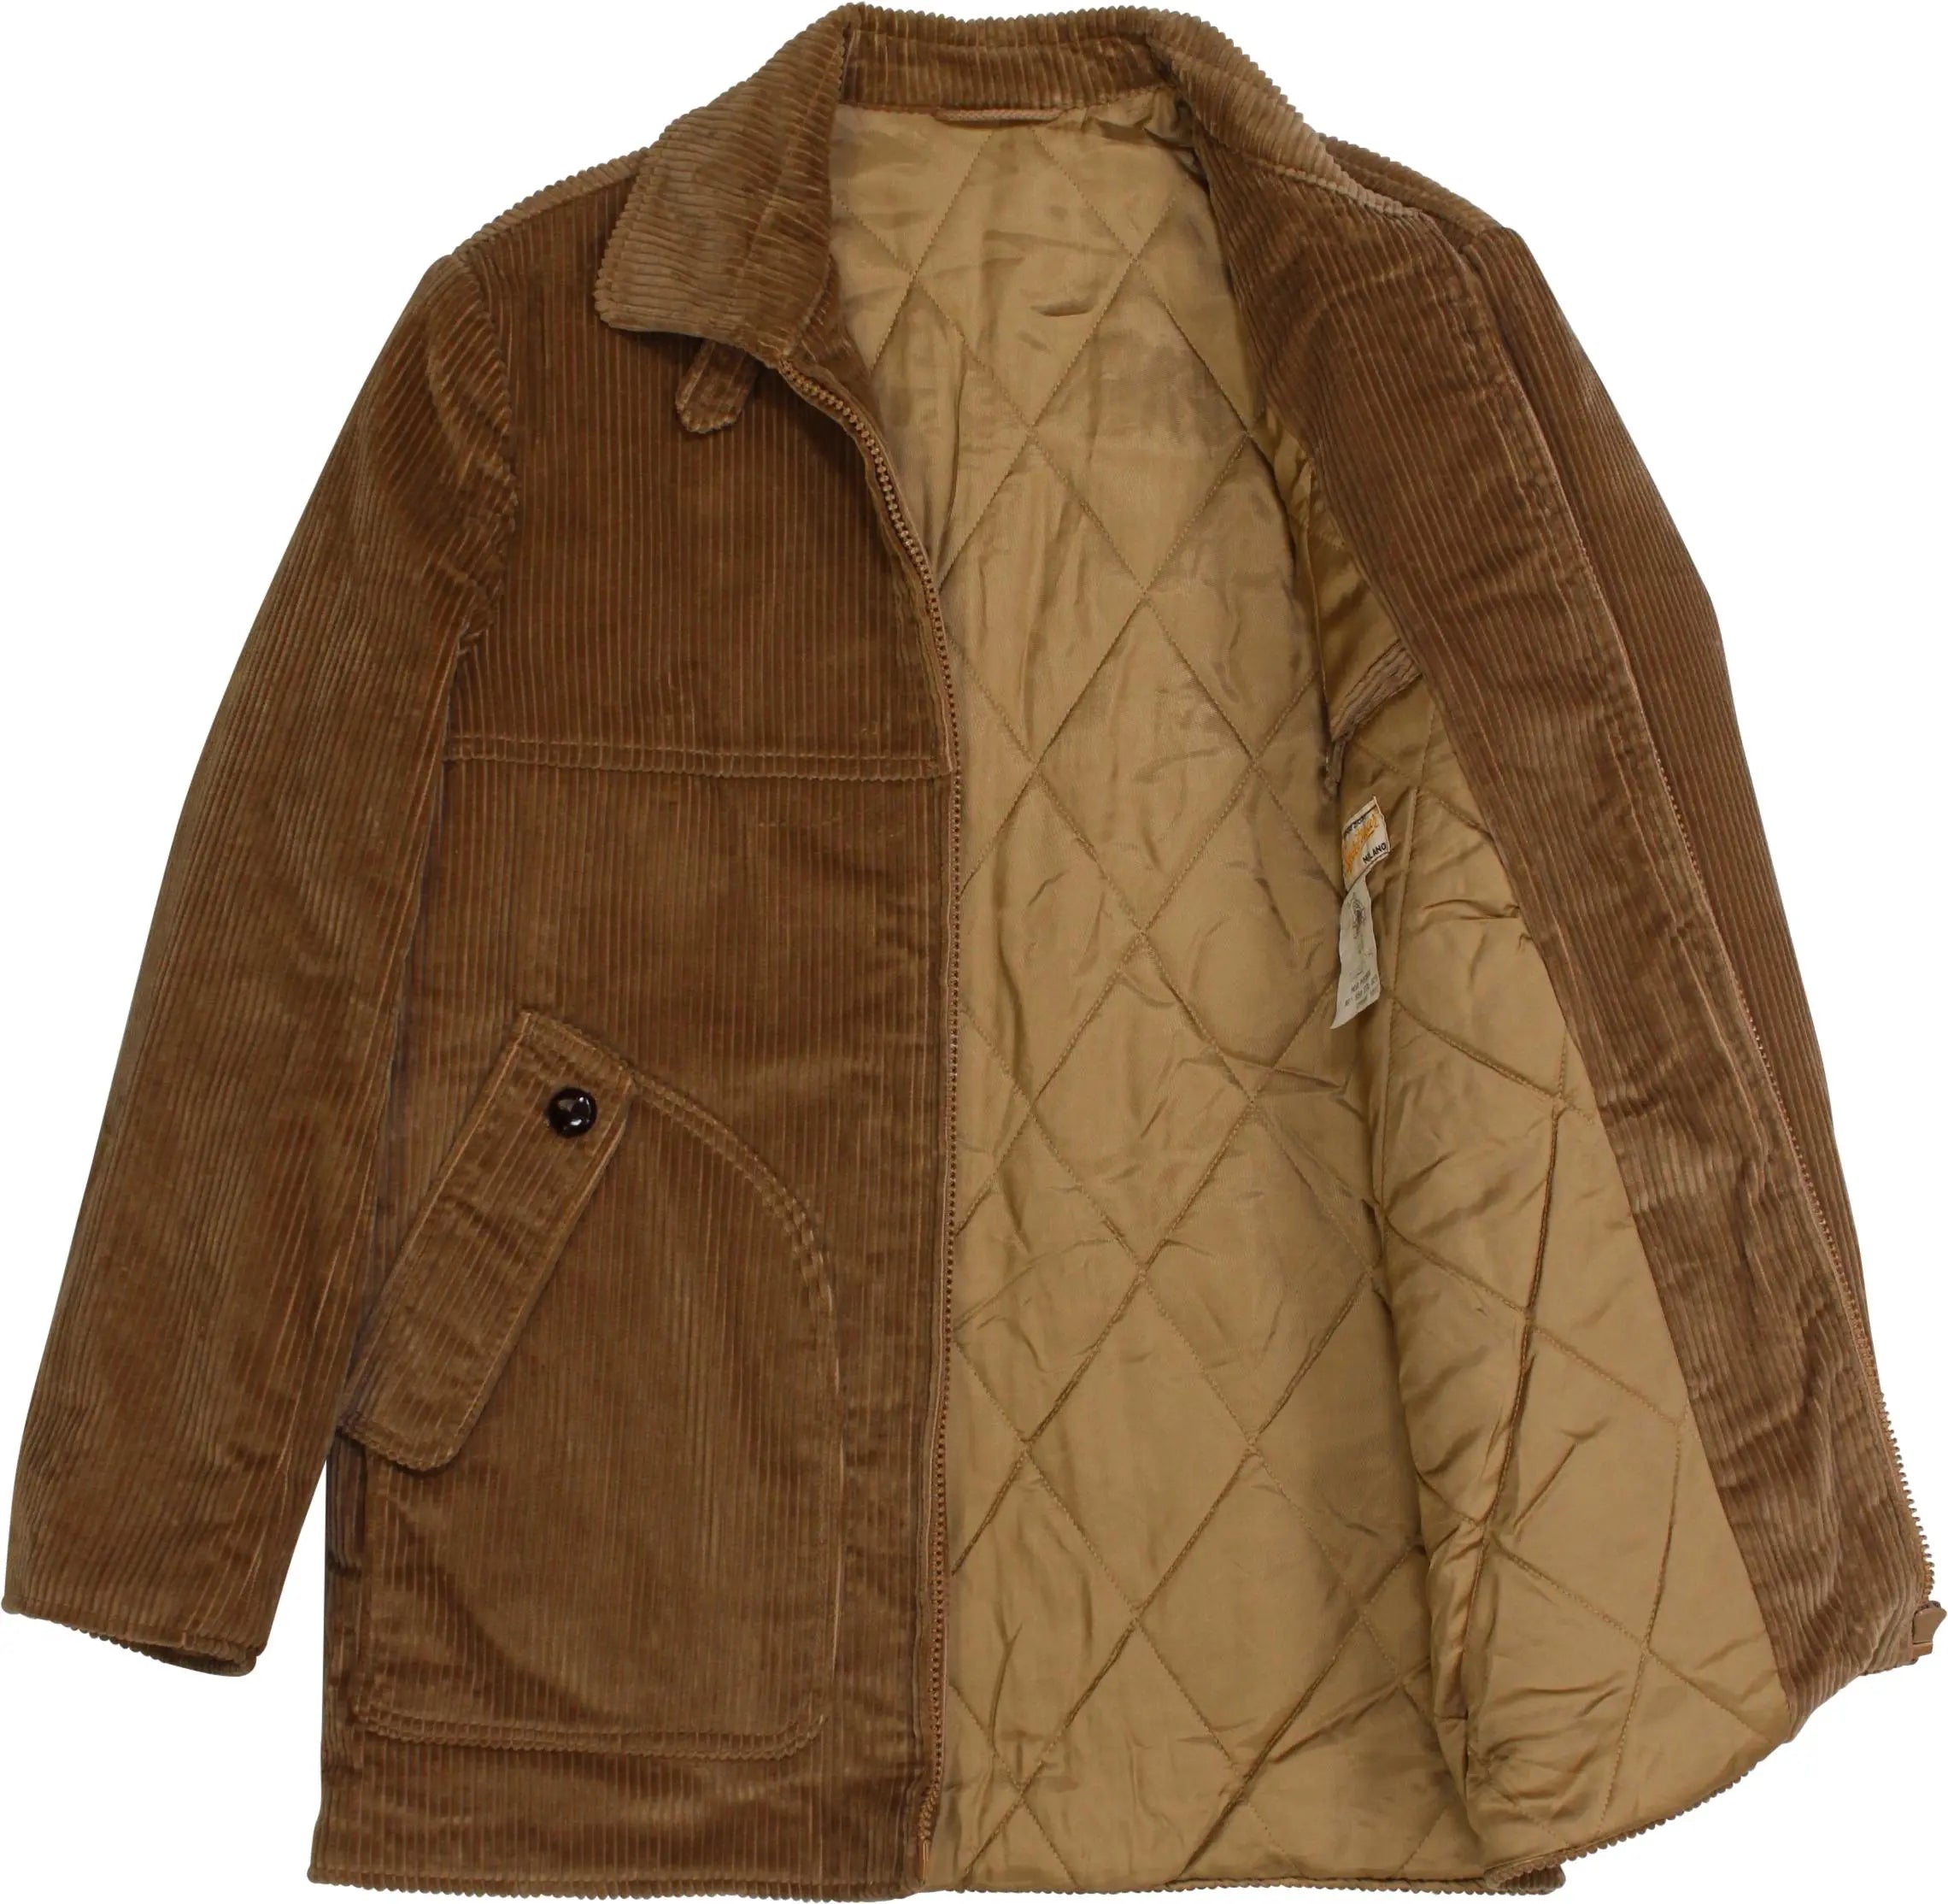 Sportmar - Vintage Corduroy Jacket by Sportmar- ThriftTale.com - Vintage and second handclothing